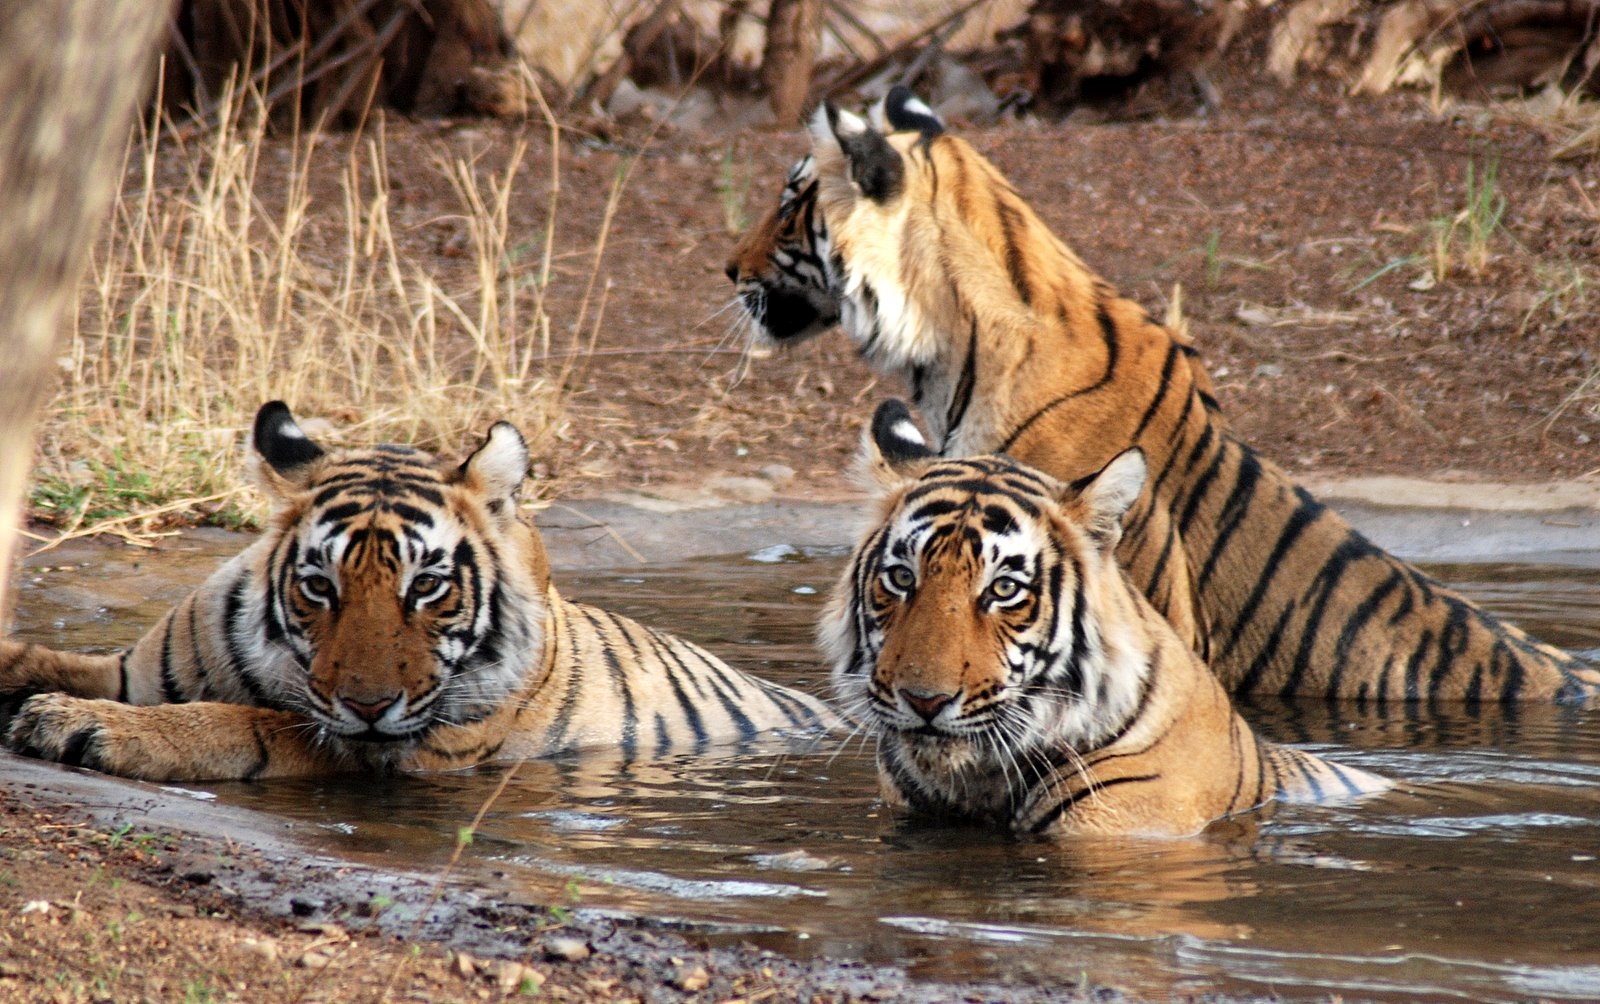 Tigers at Kanha National Park 